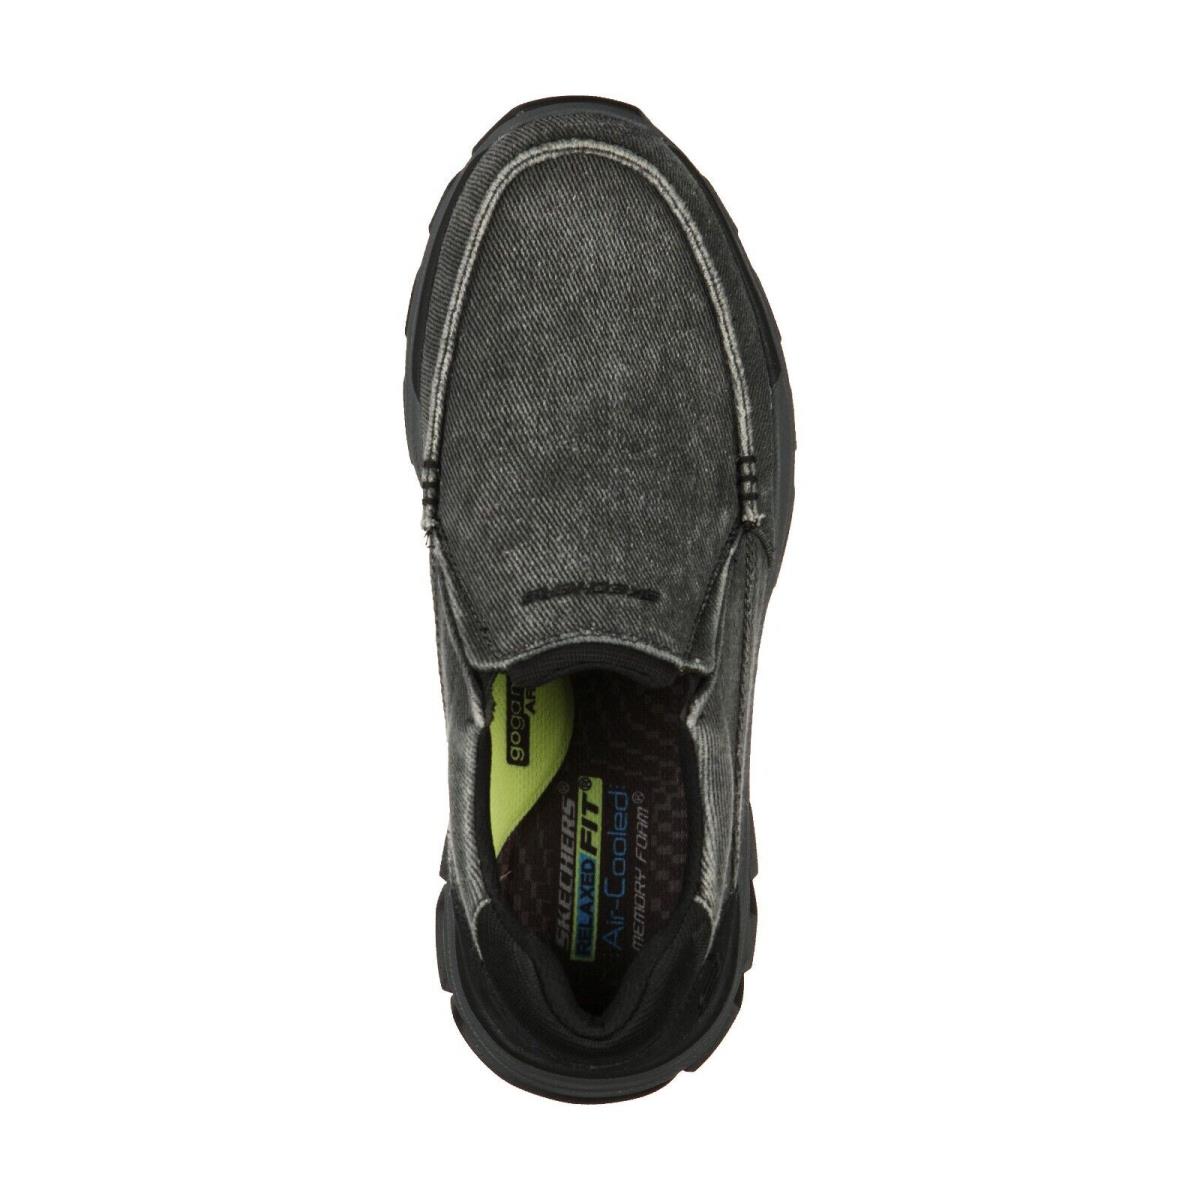 Skechers shoes Respected Vergo - Black 0